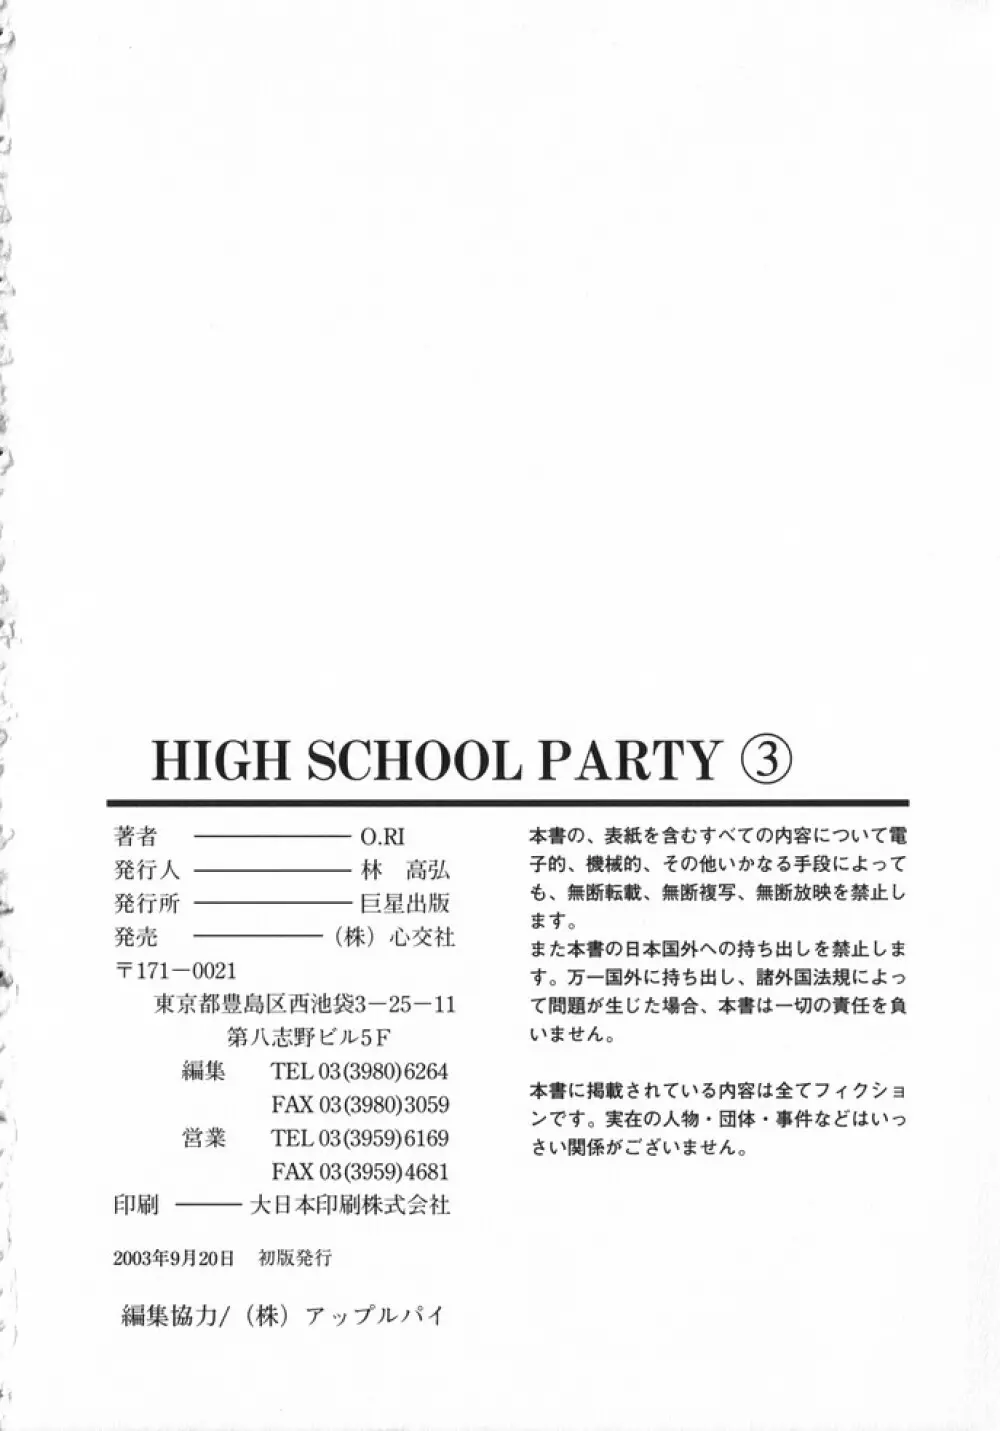 HIGH SCHOOL PARTY 3 191ページ